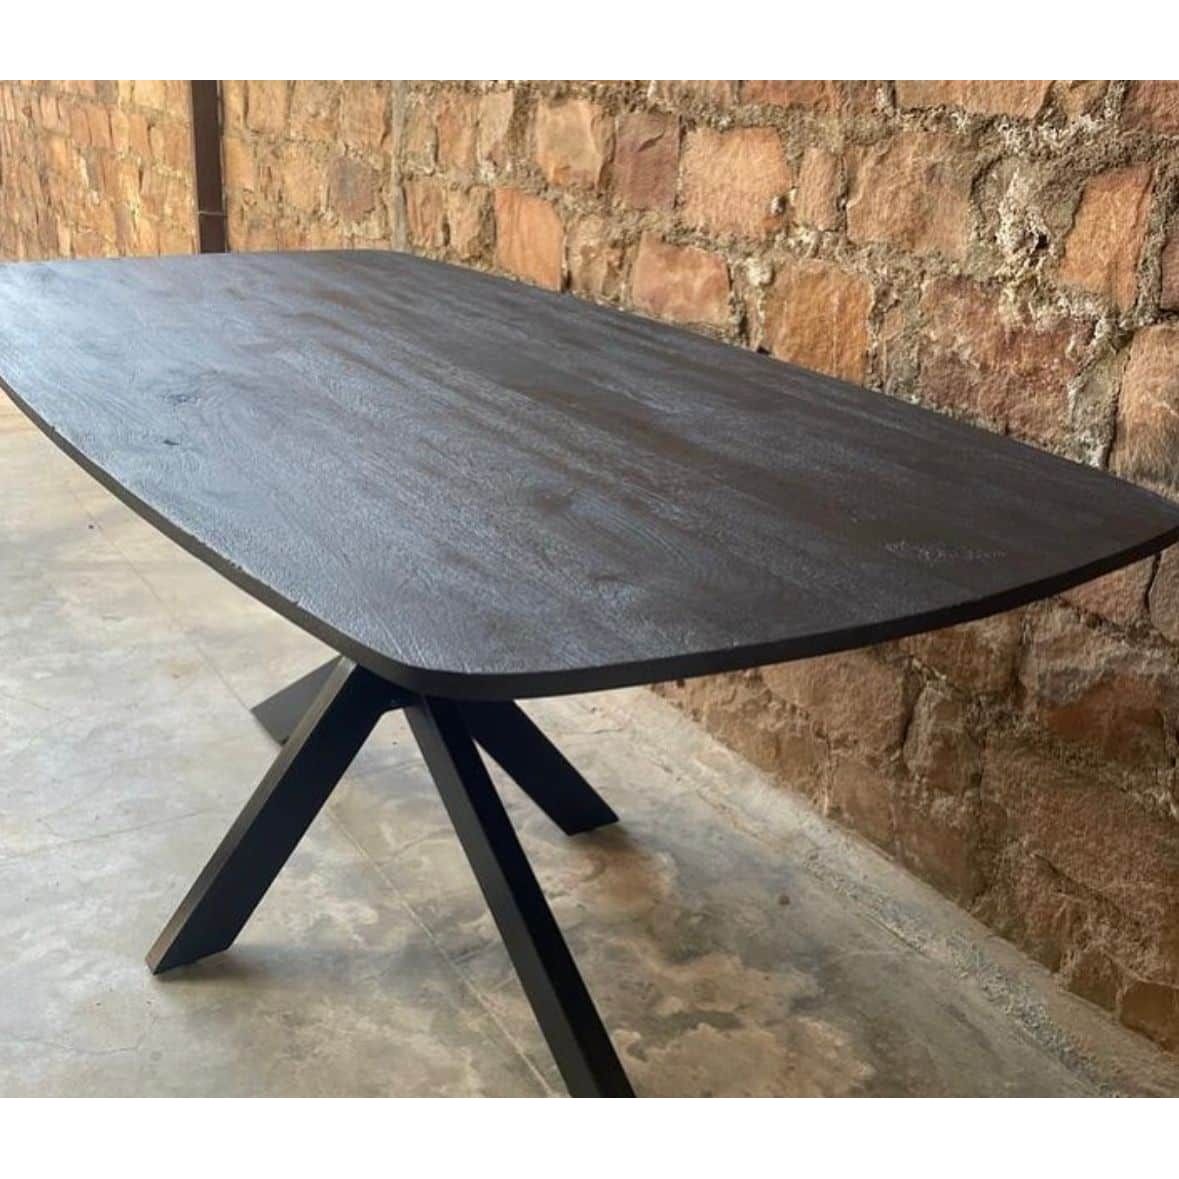 Bahia table Danish oval black - 160cm